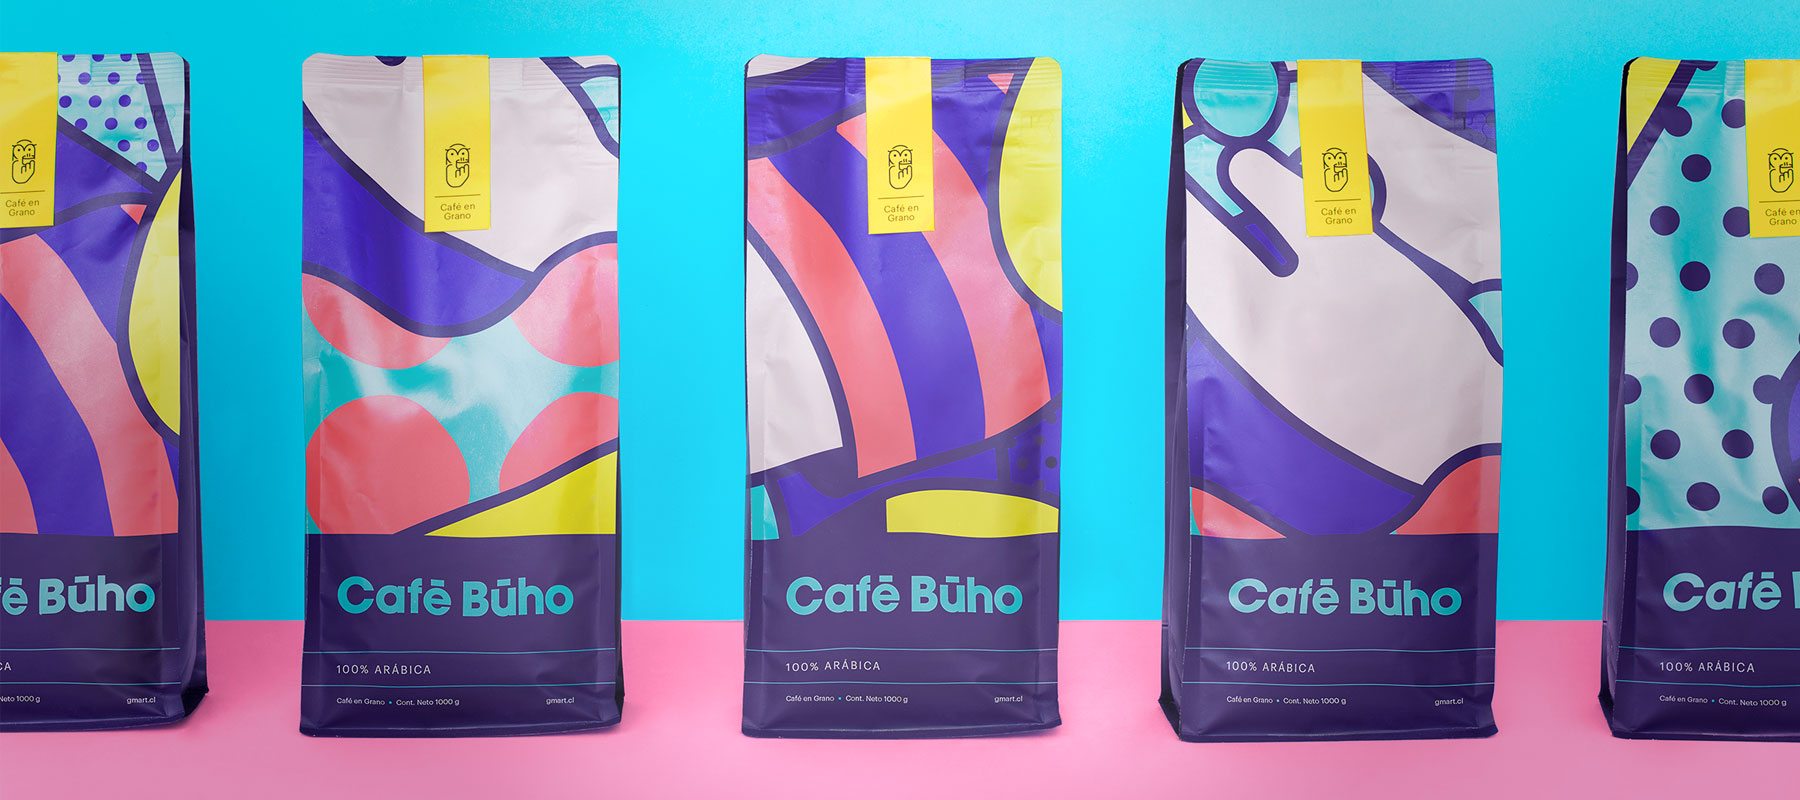 Café Būho: Package Illustration & Branding by Futura